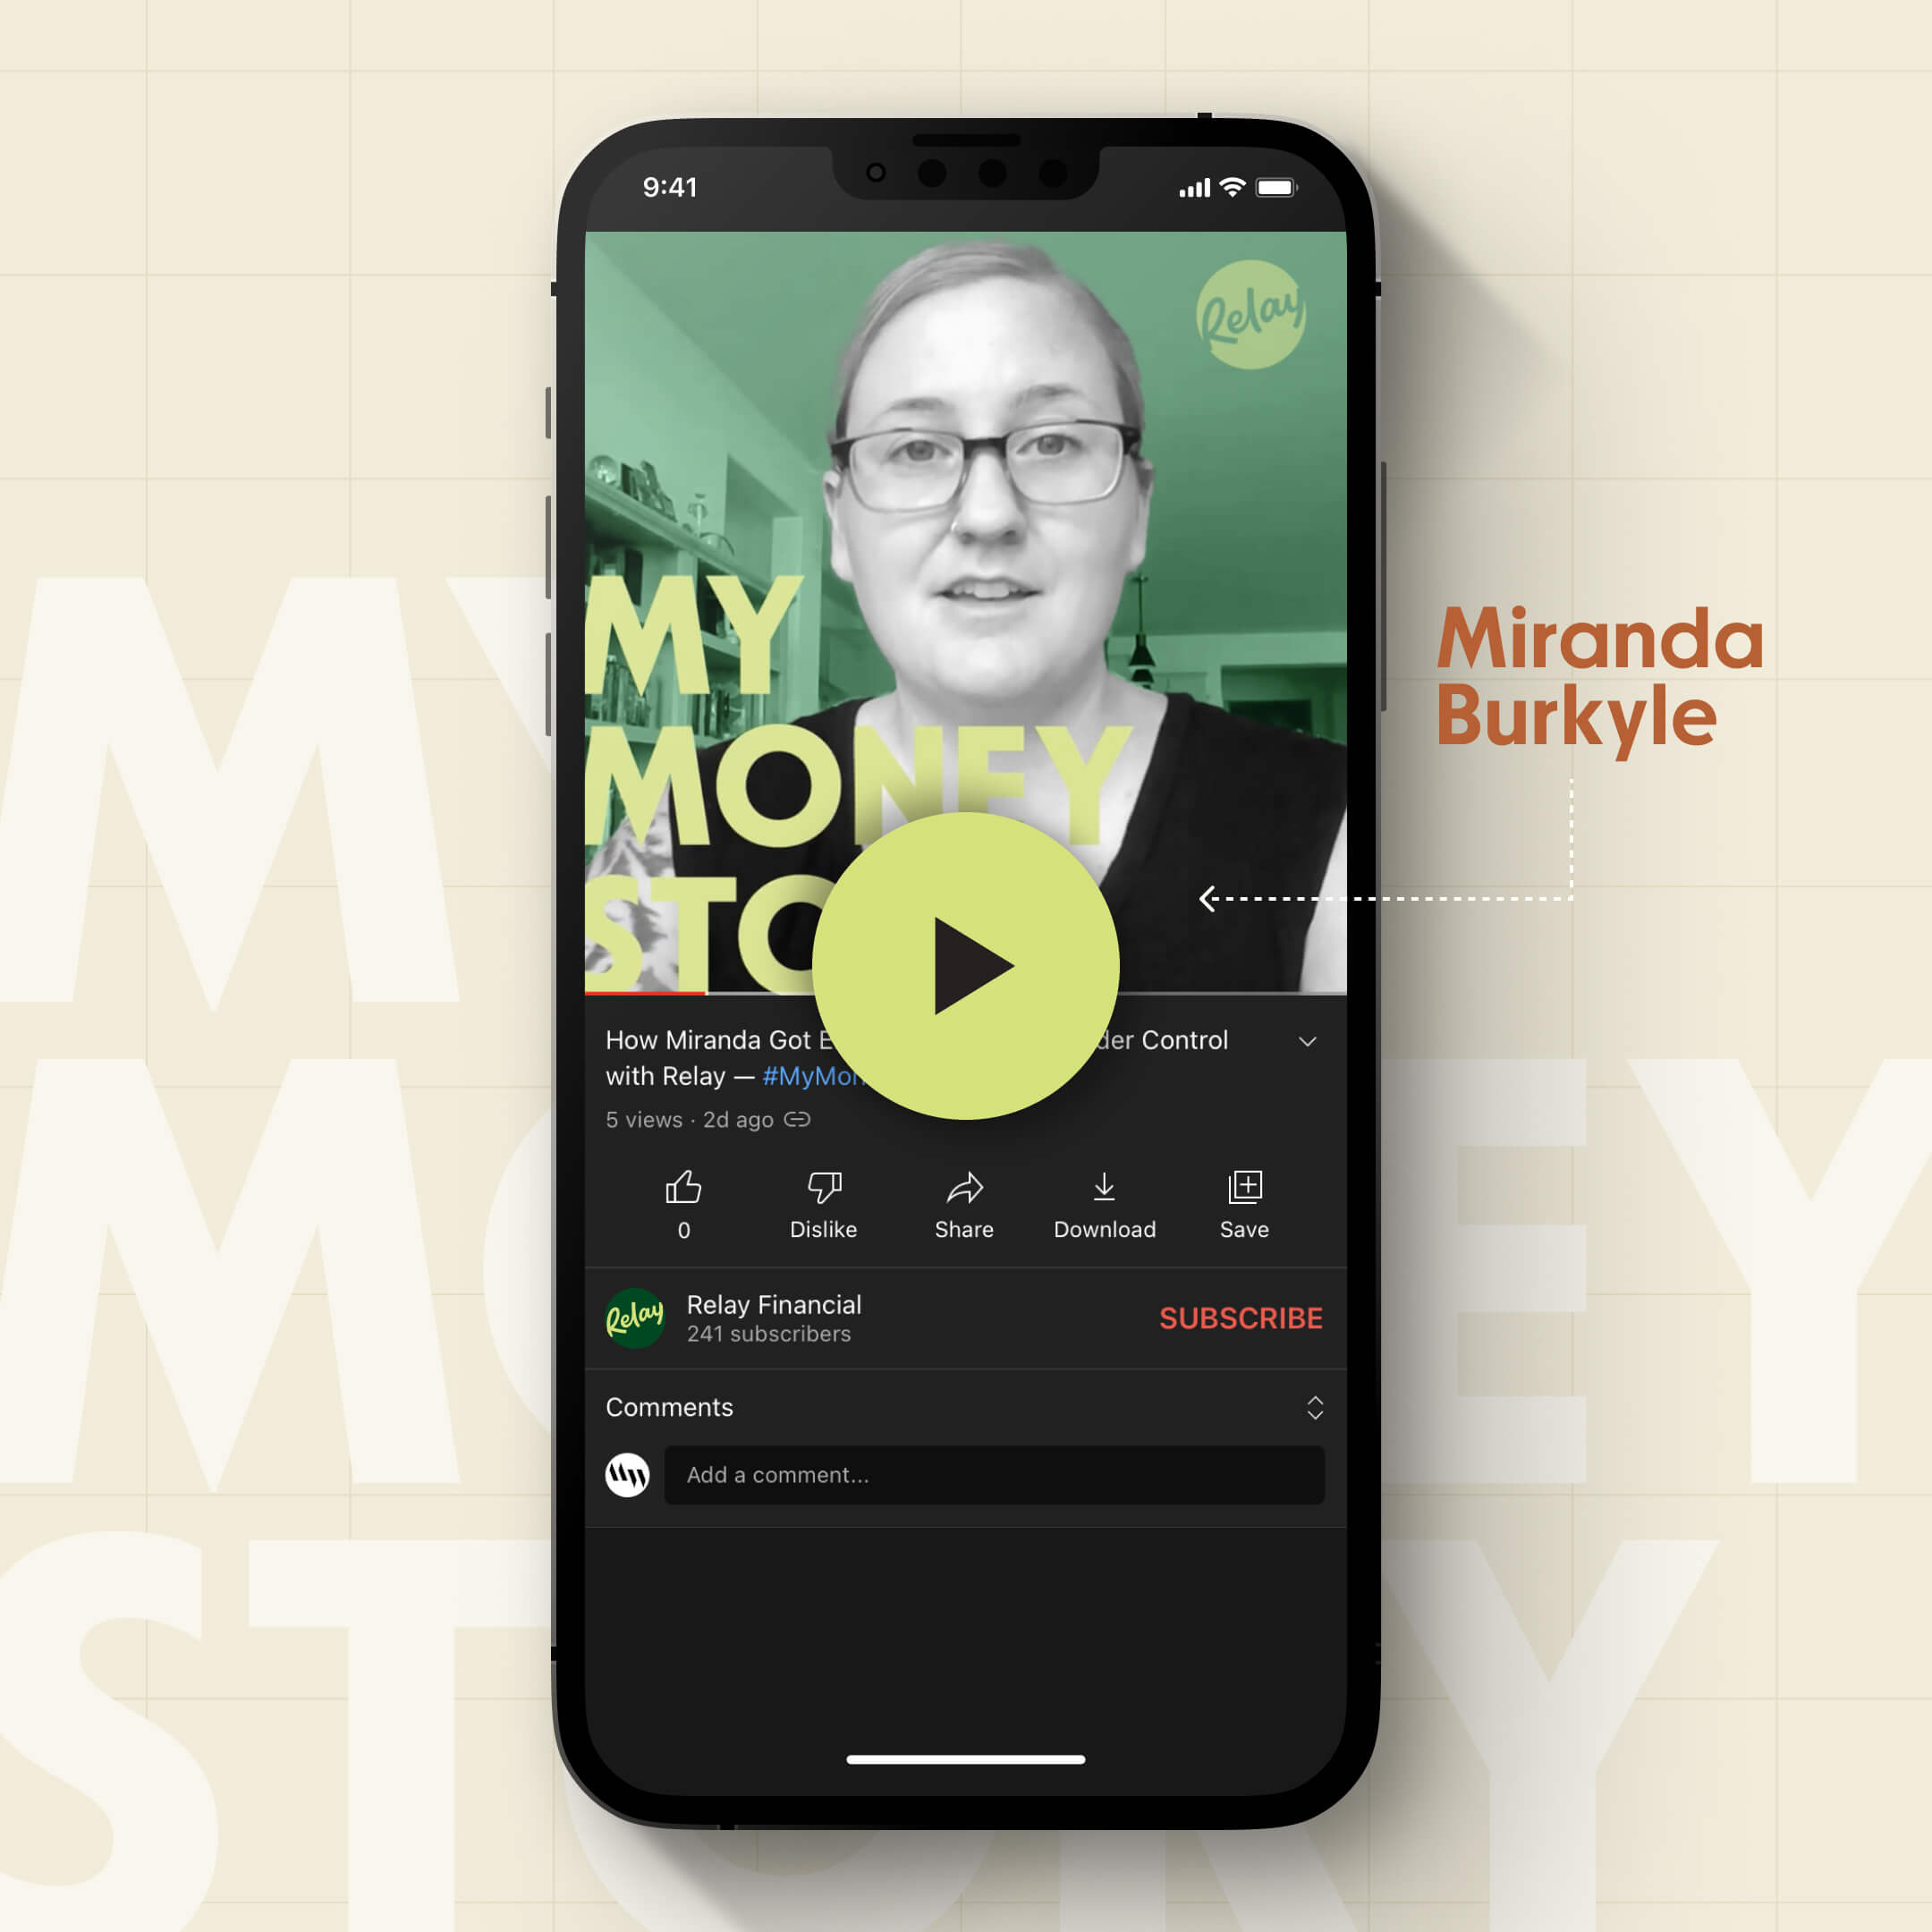 Miranda Burkyle's My Money Story video